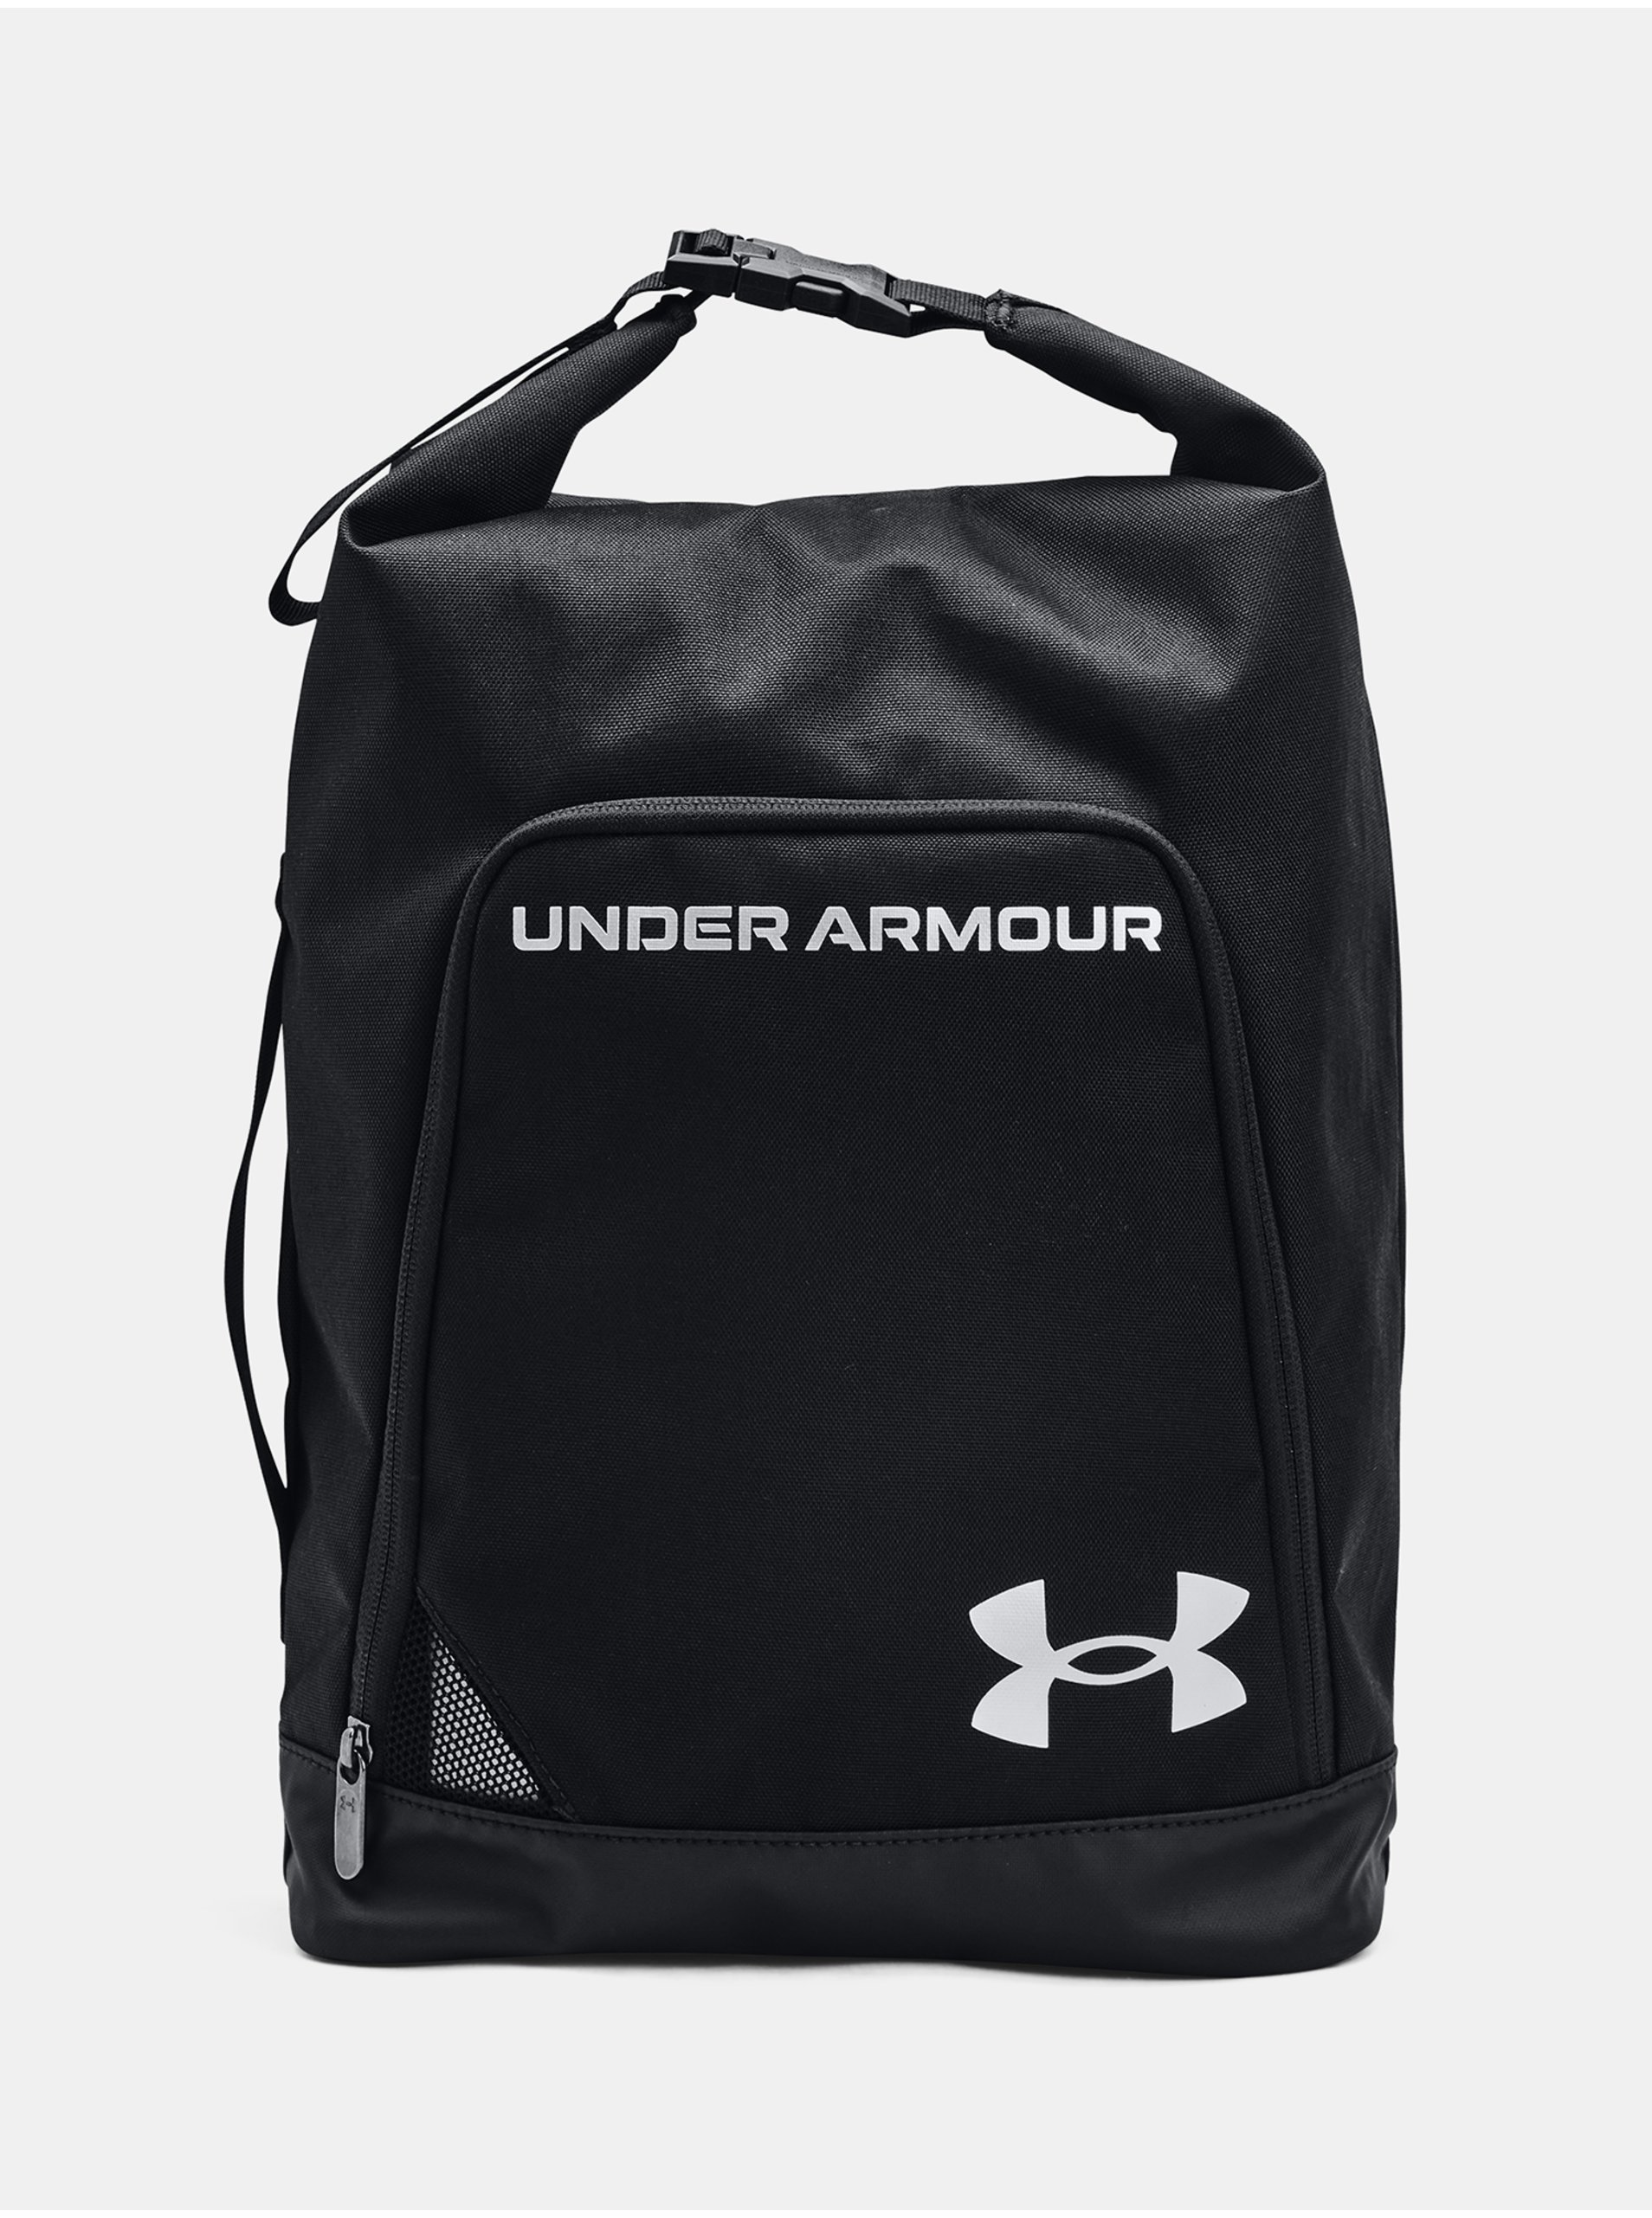 Taška Under Armour UA Contain Shoe Bag - černá